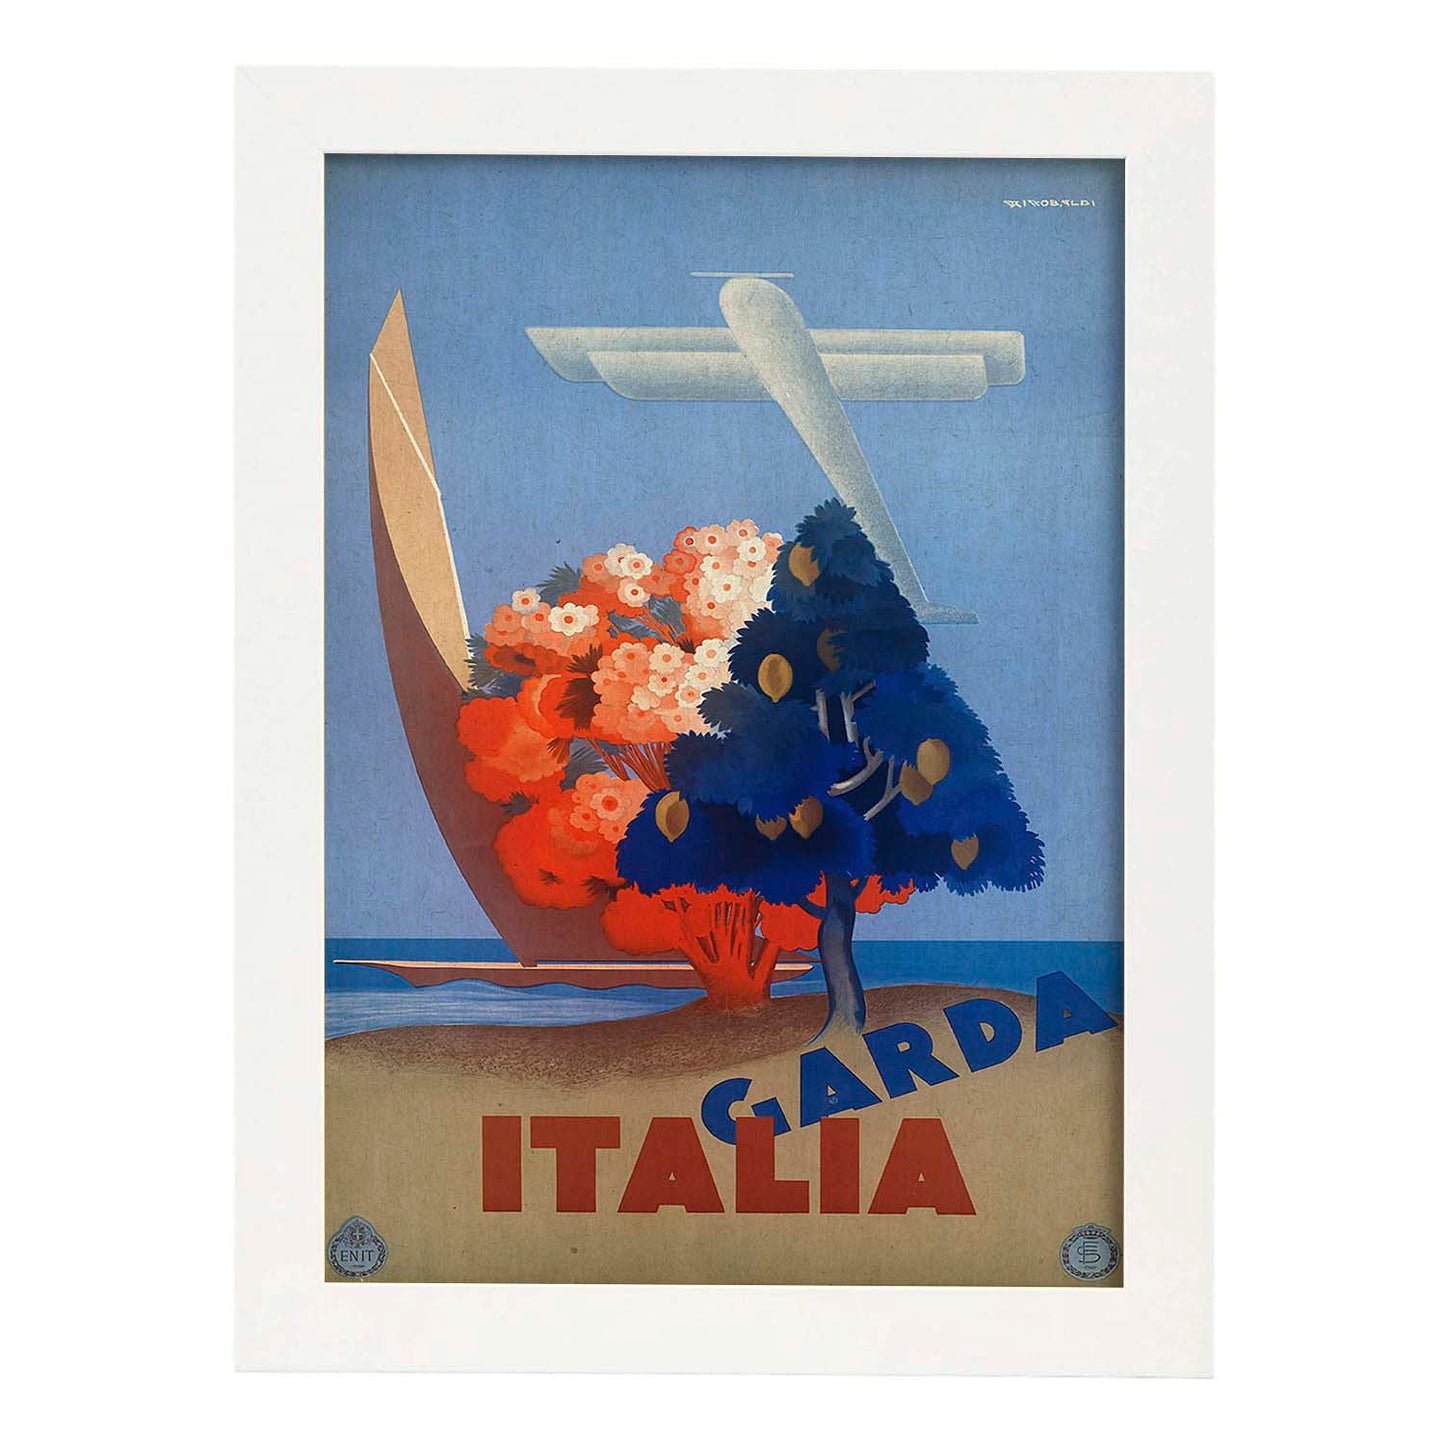 Poster vintage. Cartel vintage de Francia e Italia. Viaja a Grada.-Artwork-Nacnic-A3-Marco Blanco-Nacnic Estudio SL